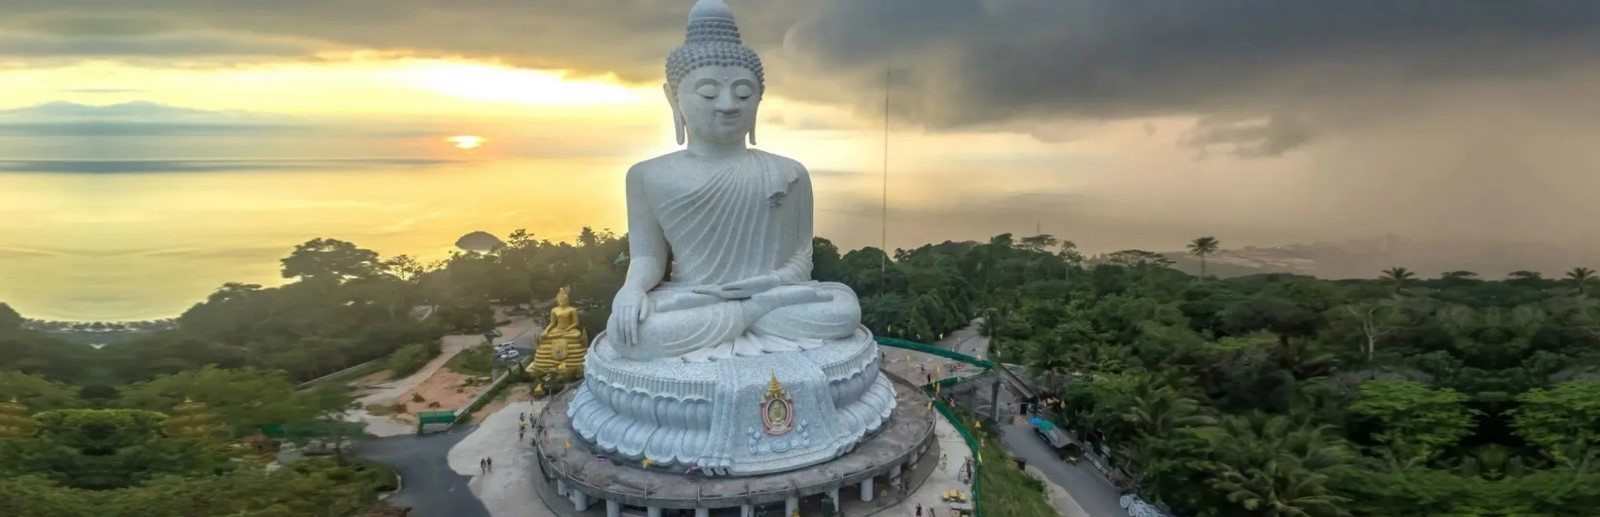 Big Buddha de Phuket.jpg